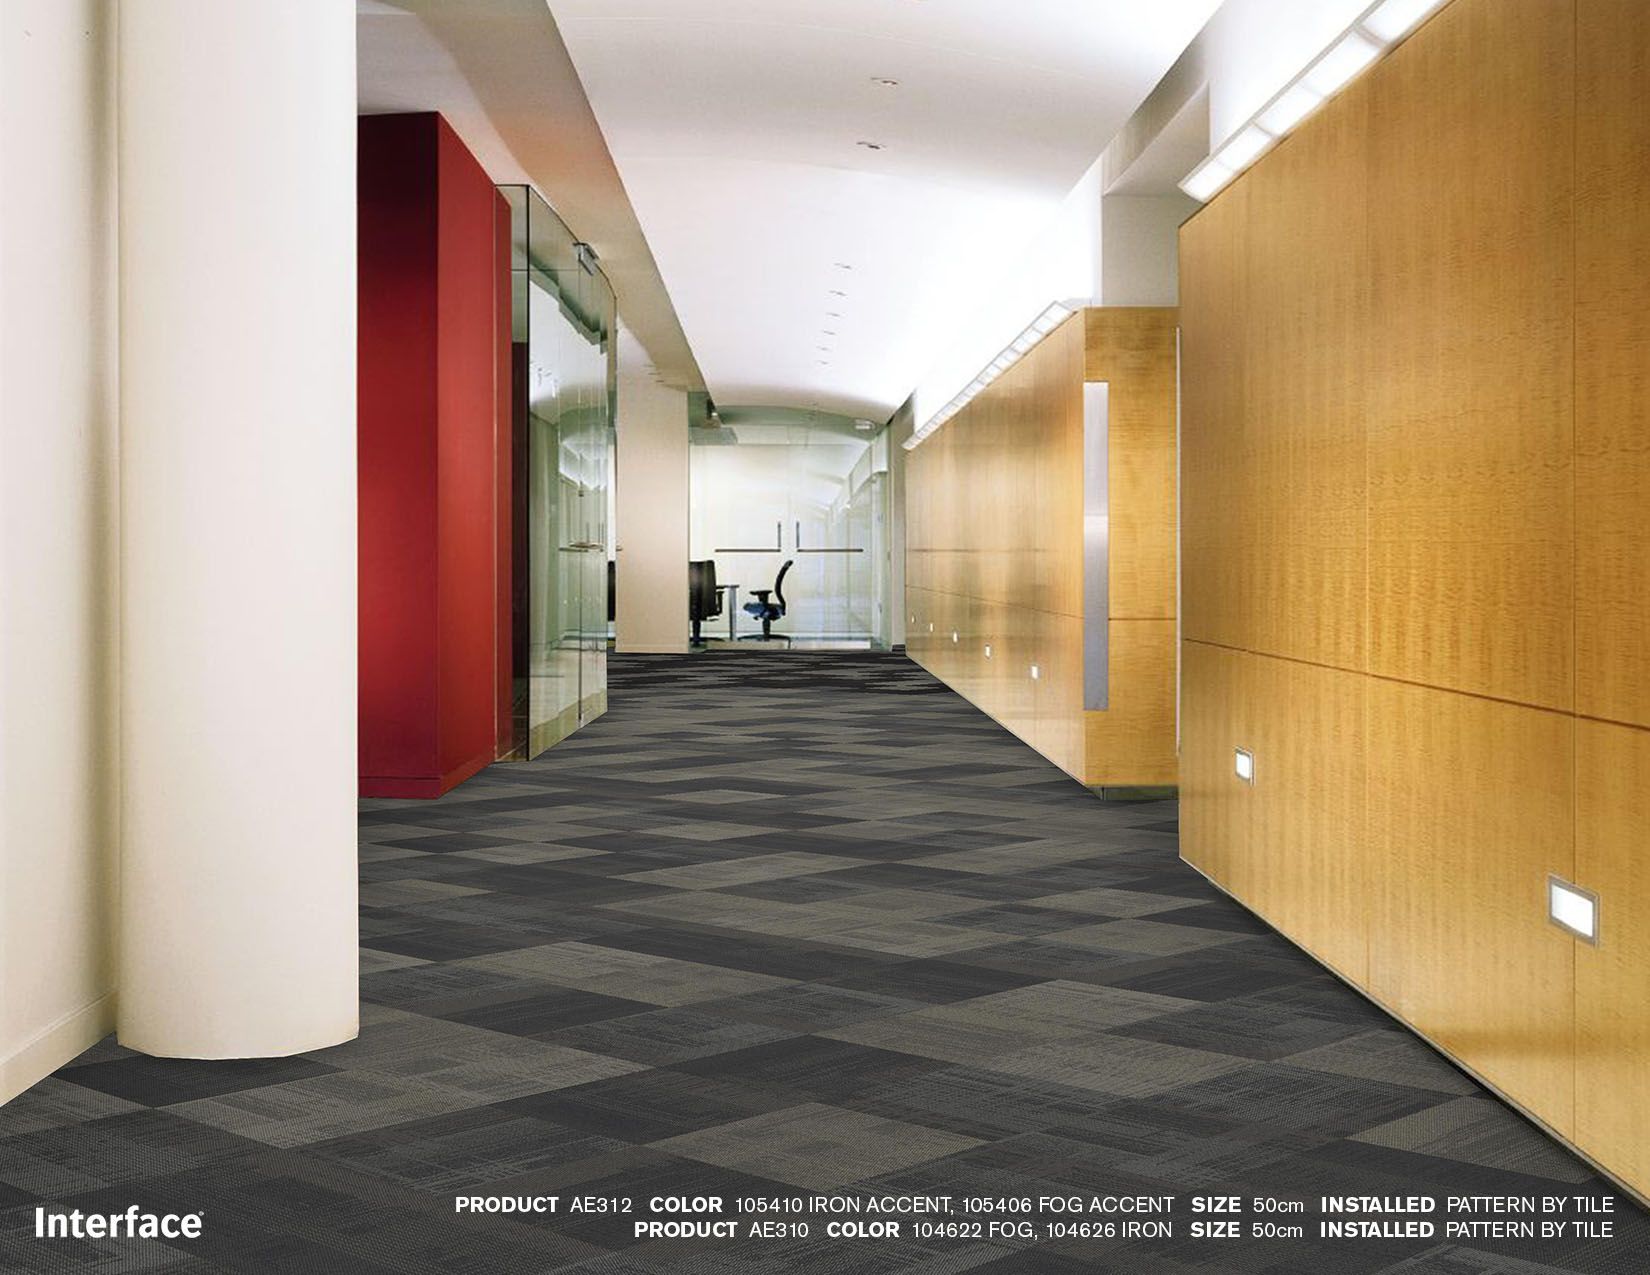 Interface SR899 and AE312 carpet tile in hallway scene imagen número 2